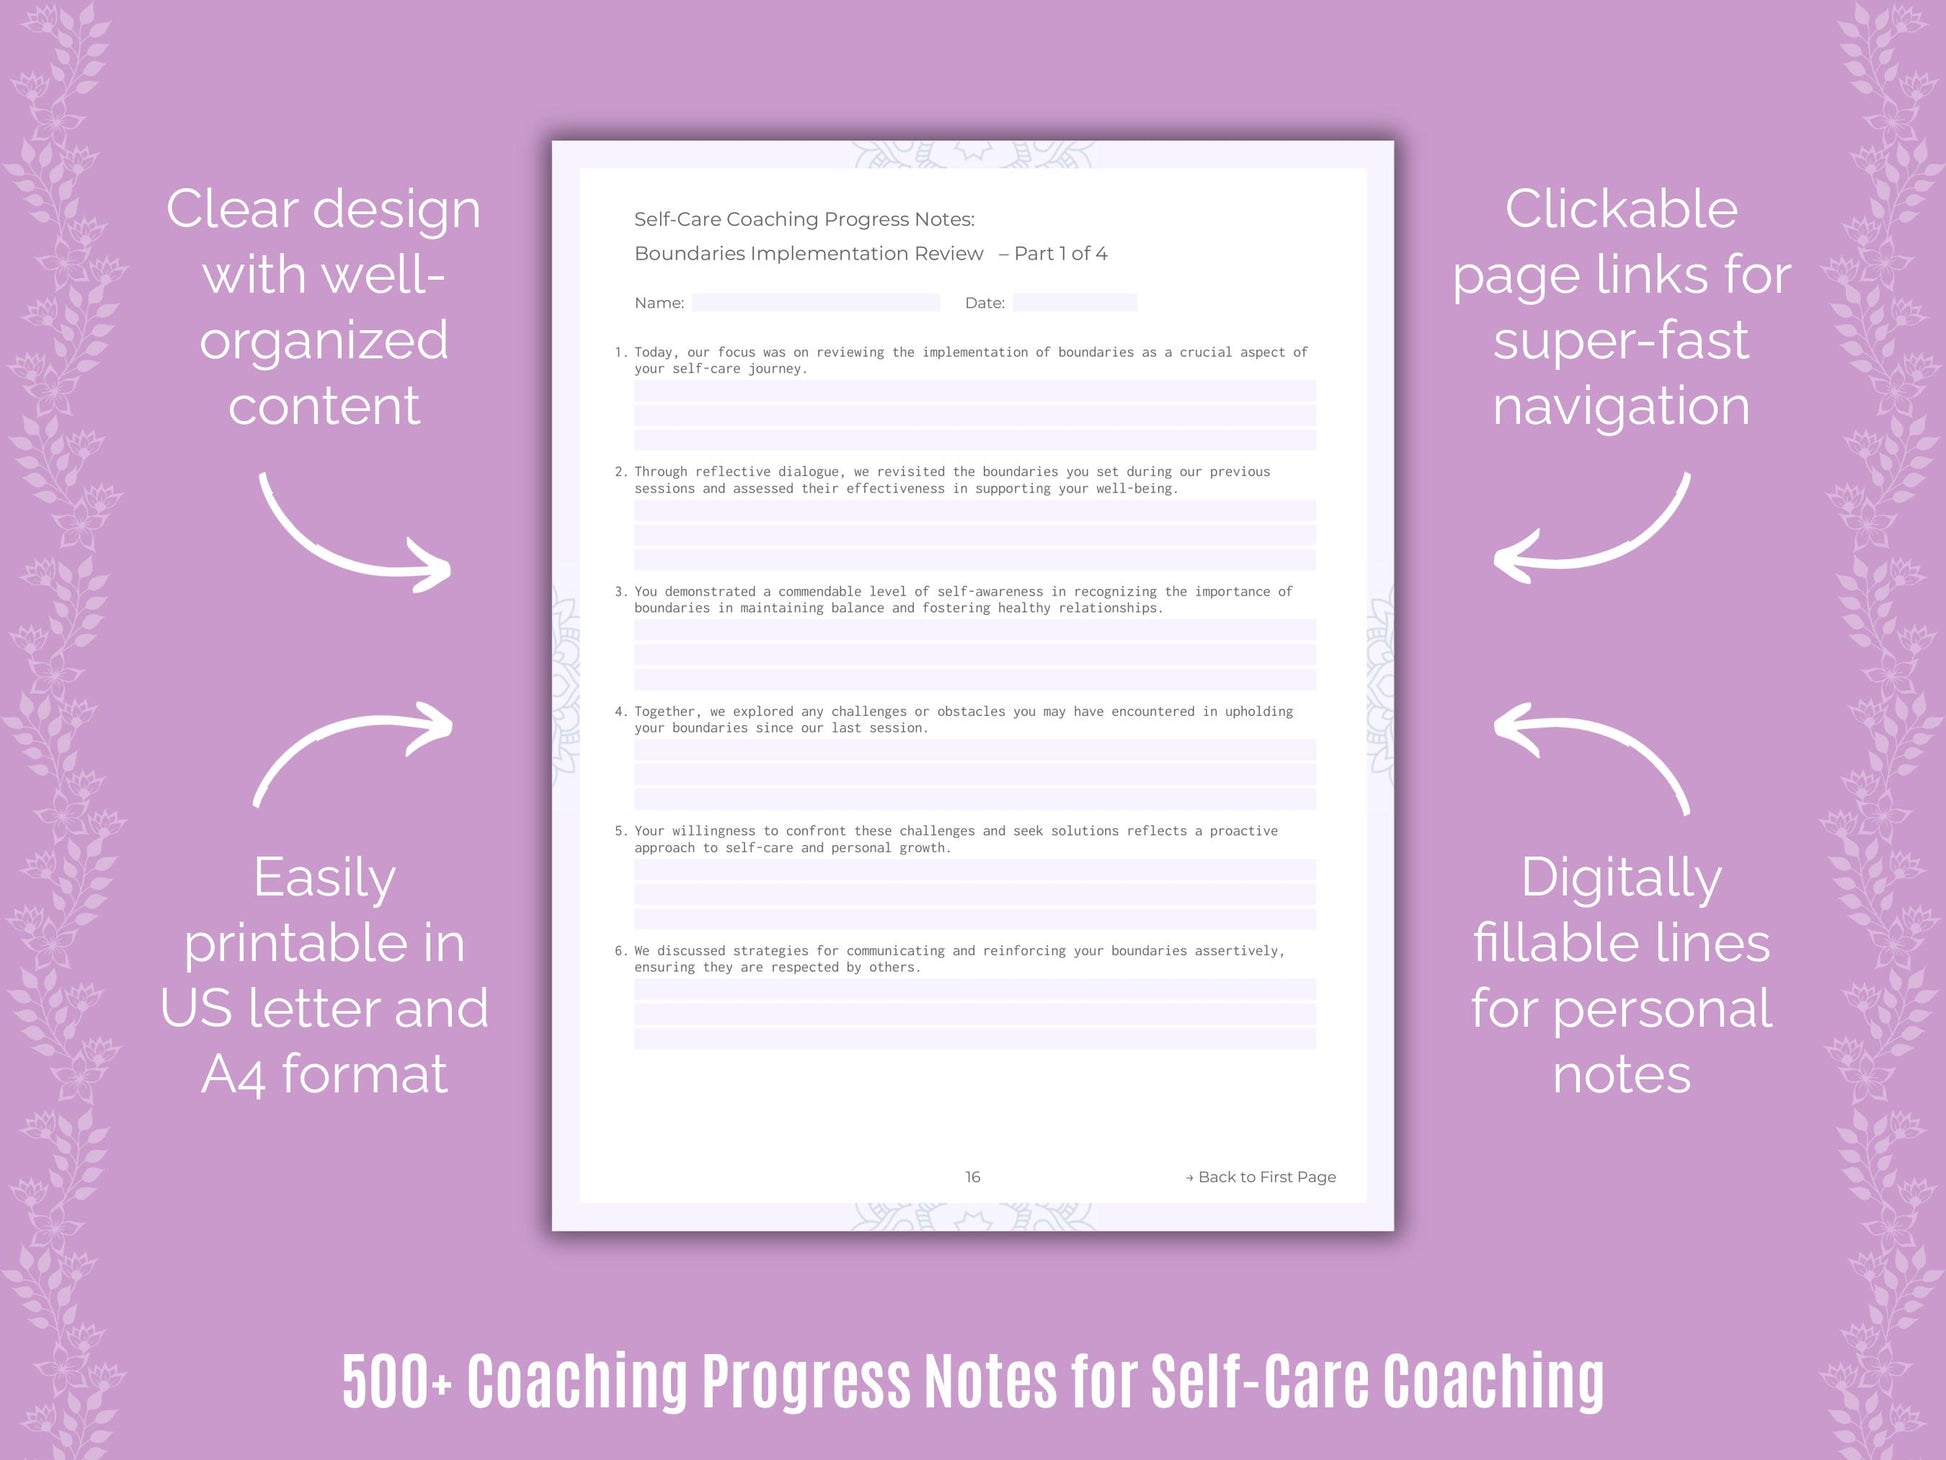 Self-Care Coaching Progress Notes